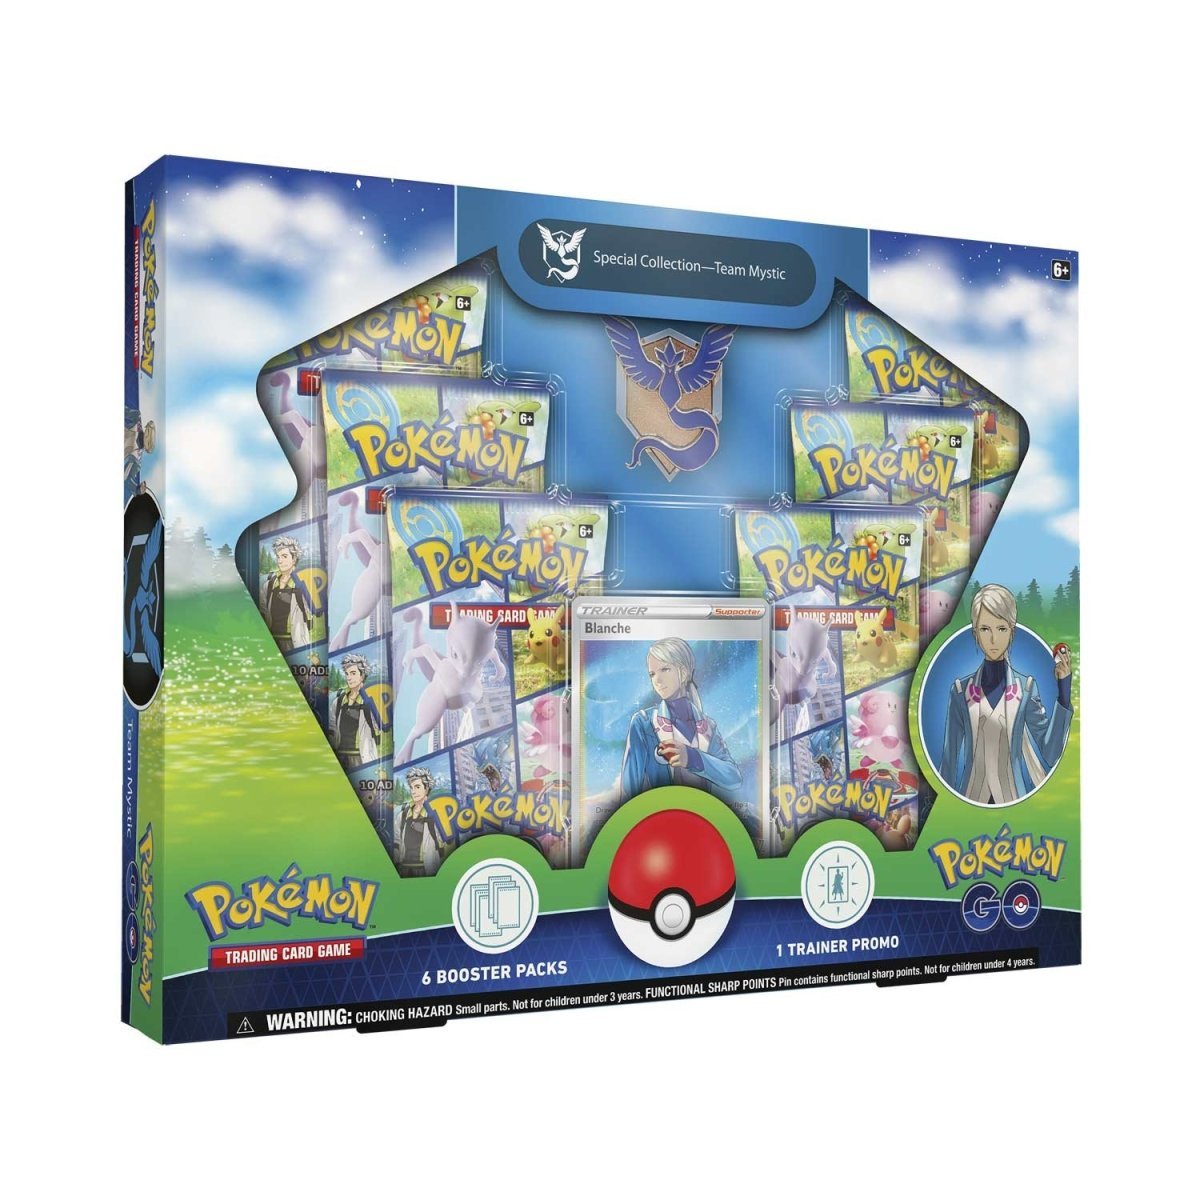 Pokémon GO Special Collection (Team Mystic, Team Valor, or Team Insitnct) - PokeRvmCollection Box